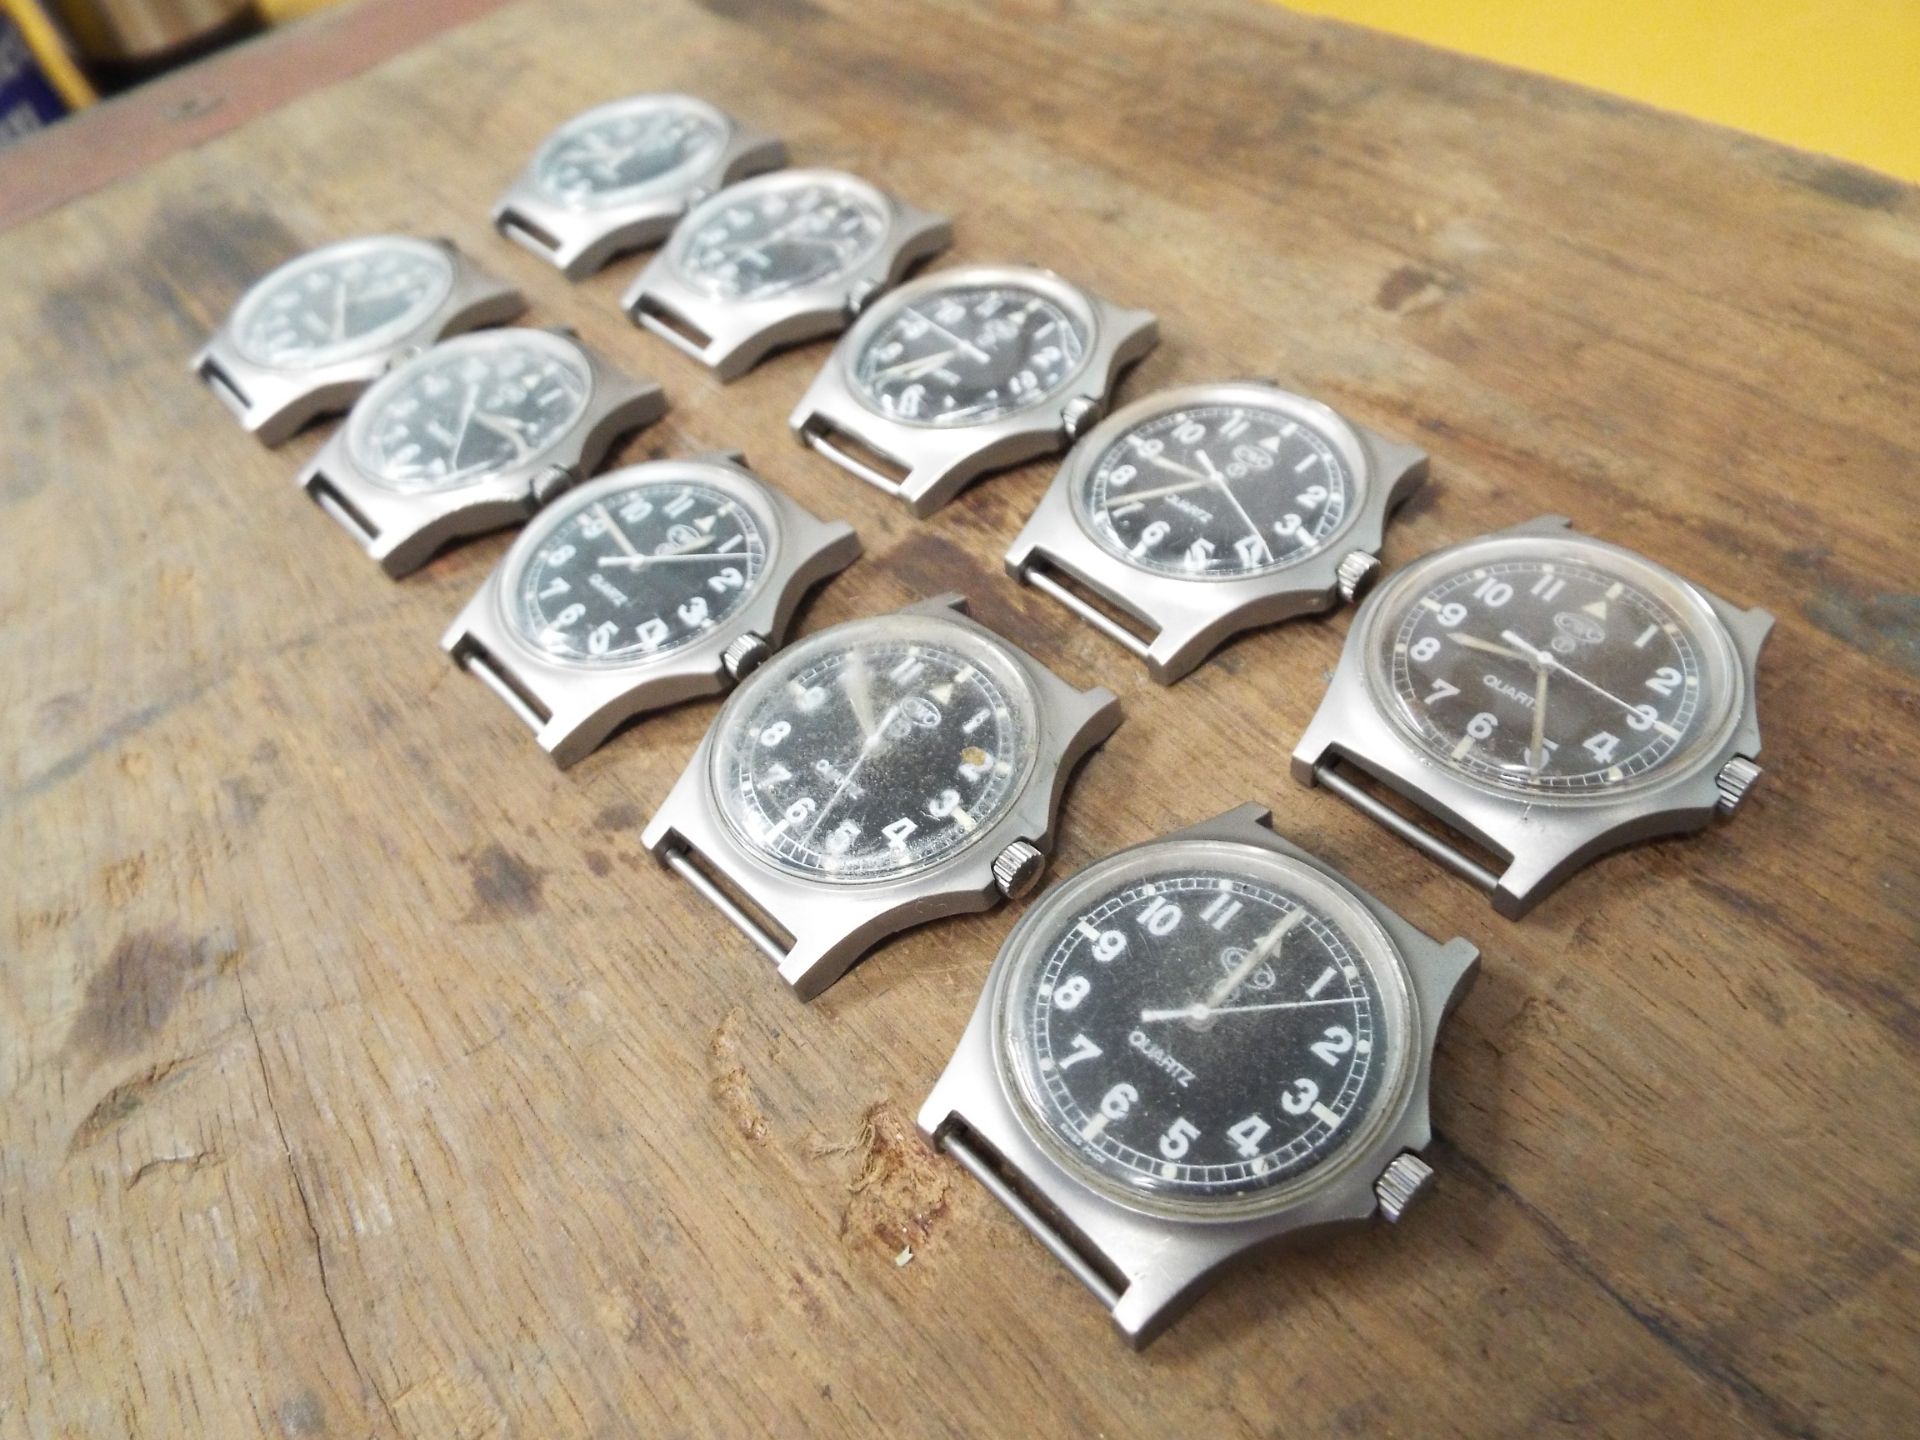 10 x Genuine British Army CWC Quartz Wrist Watches - Image 3 of 6